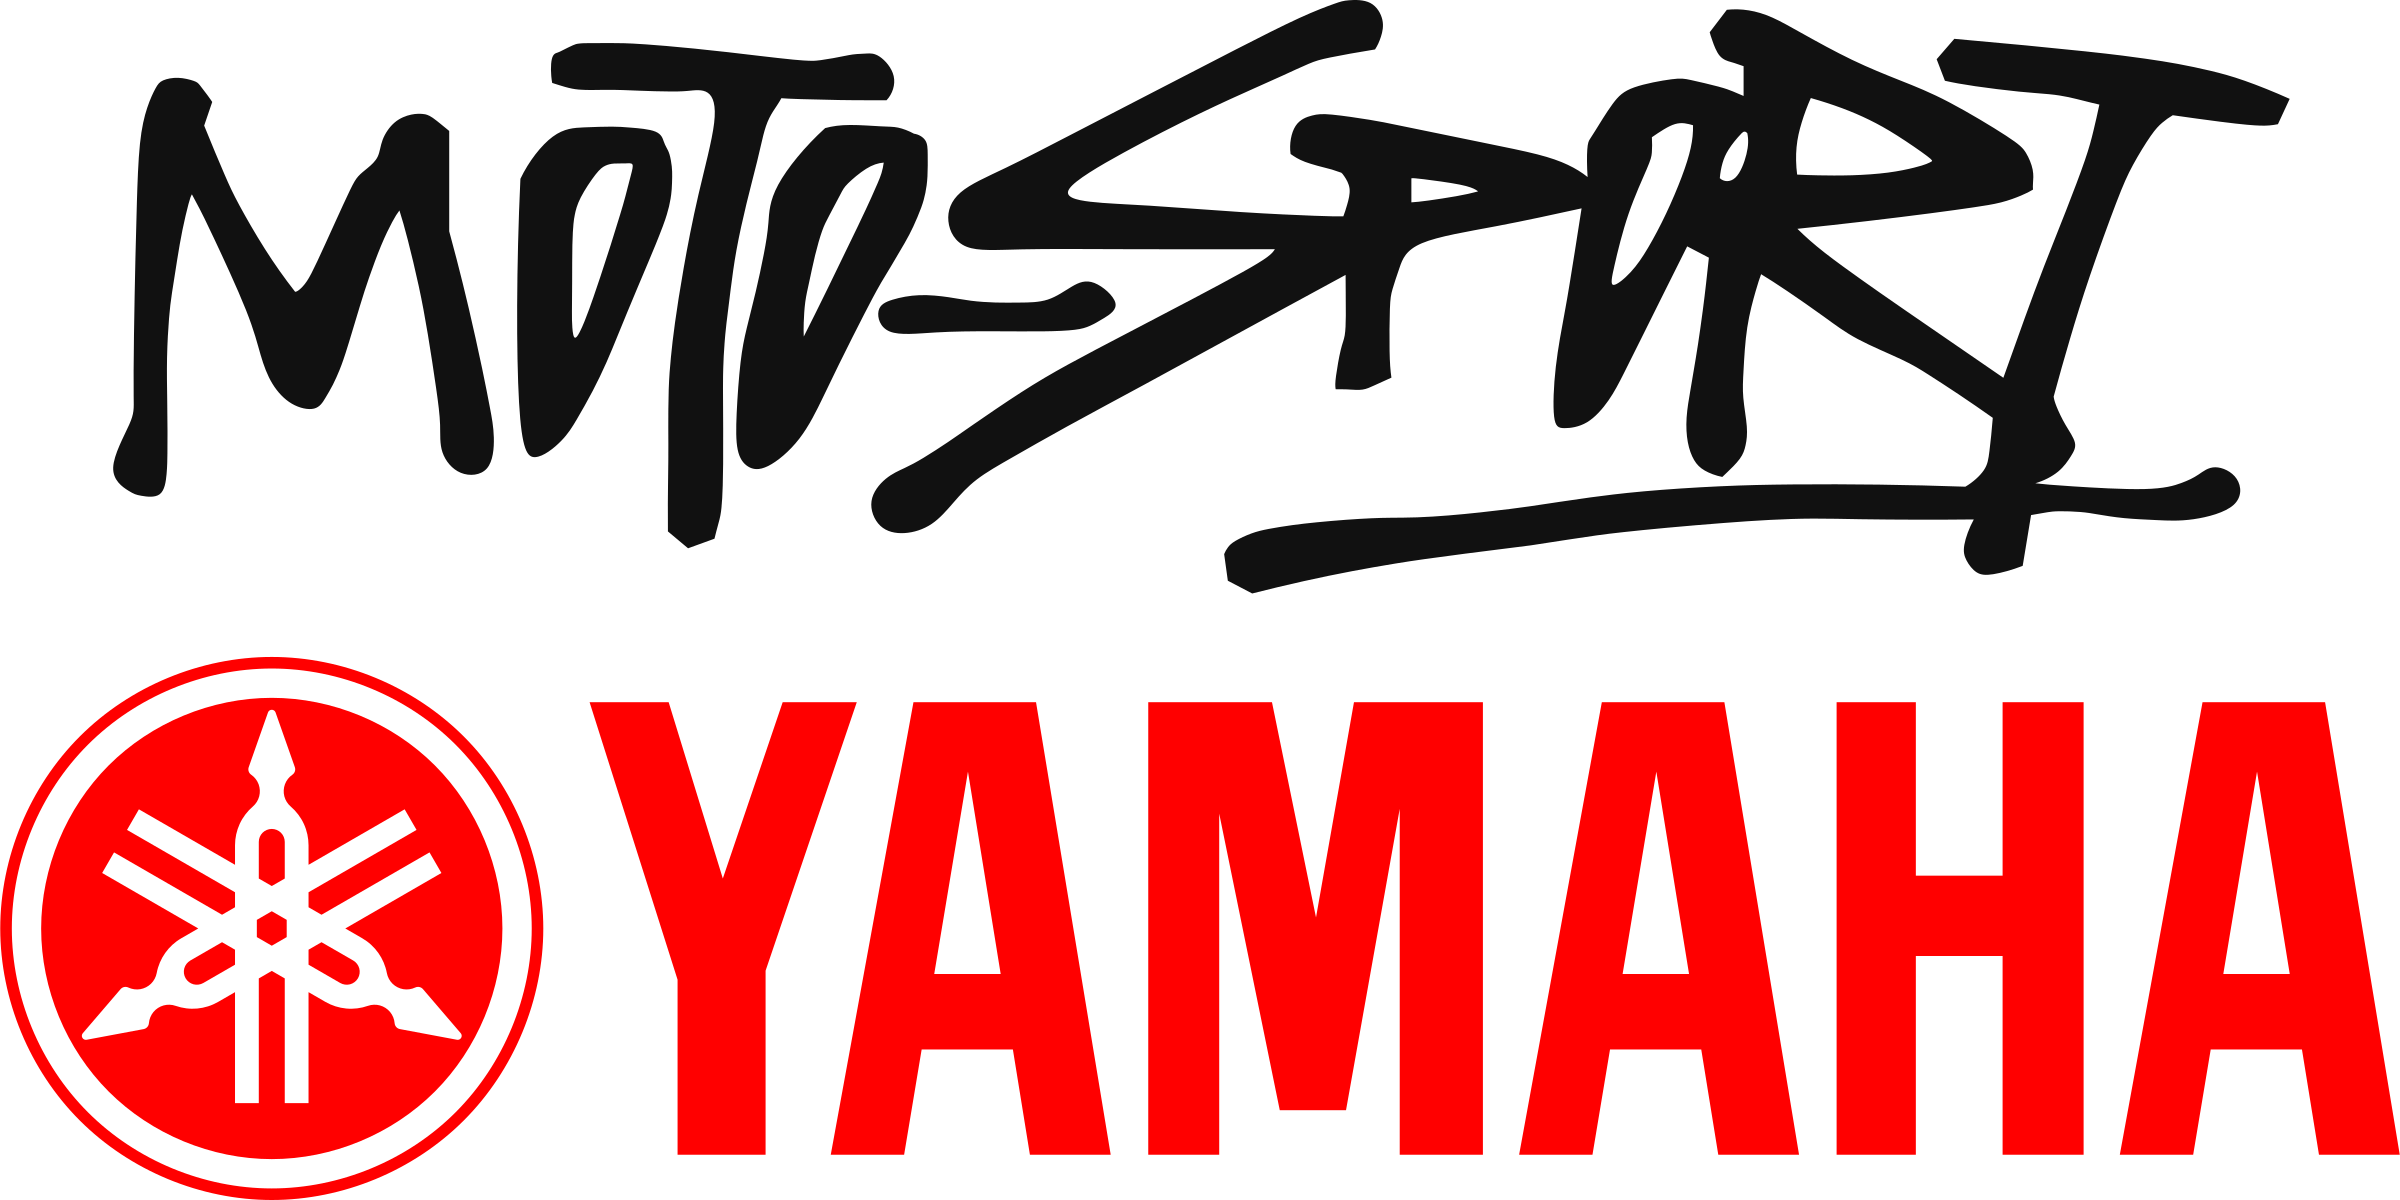 Yamaha Logo PNG Image HD